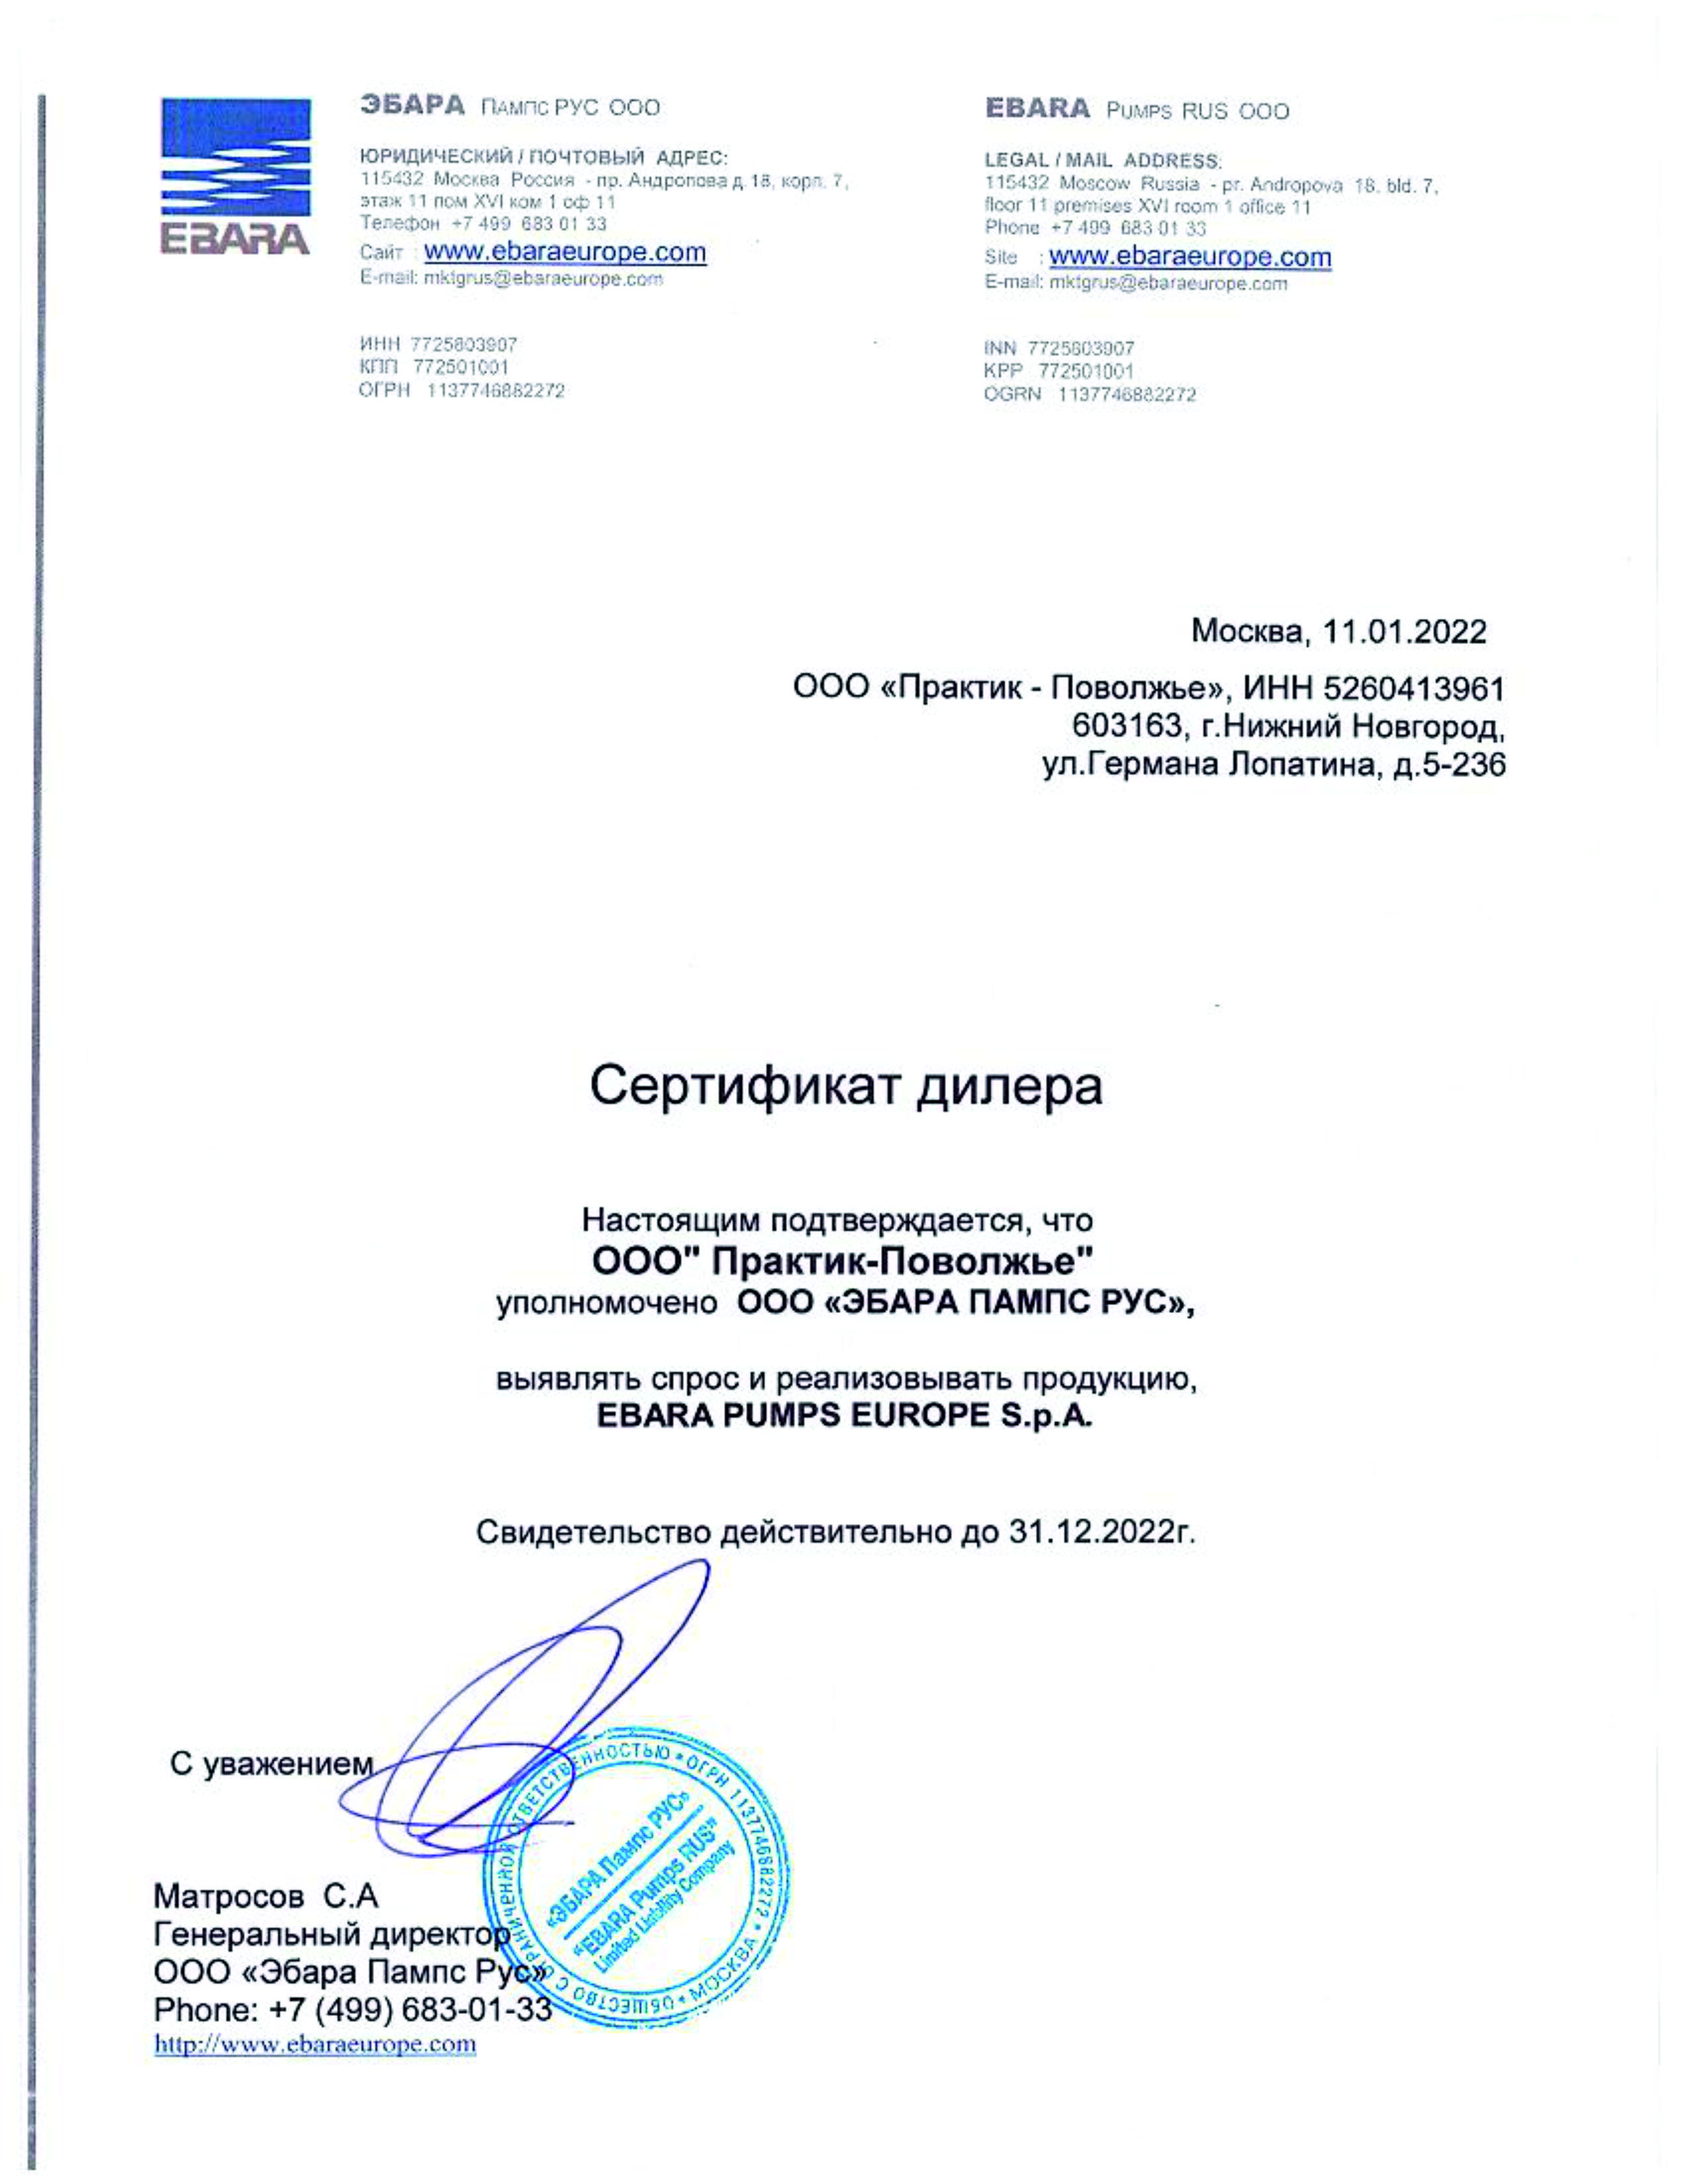 Сертификат дилера ООО "Эбара Пампс Рус"